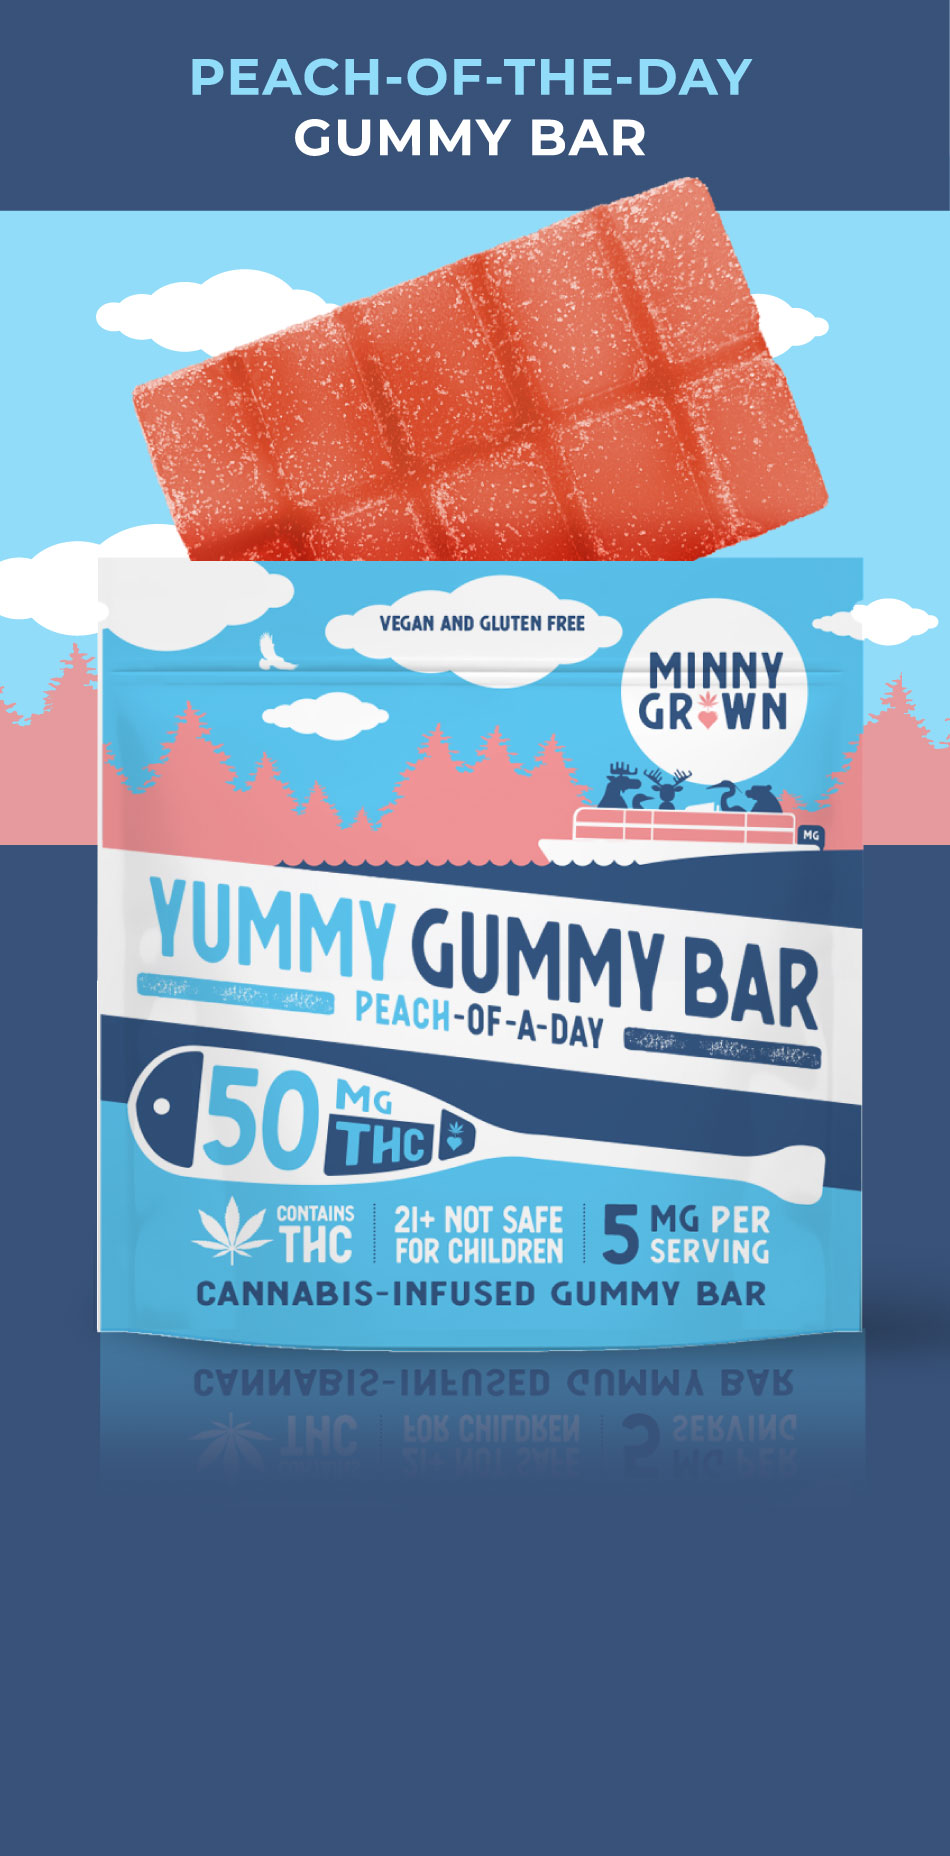 Featured image for “Yummy Gummy Bar – Peach”